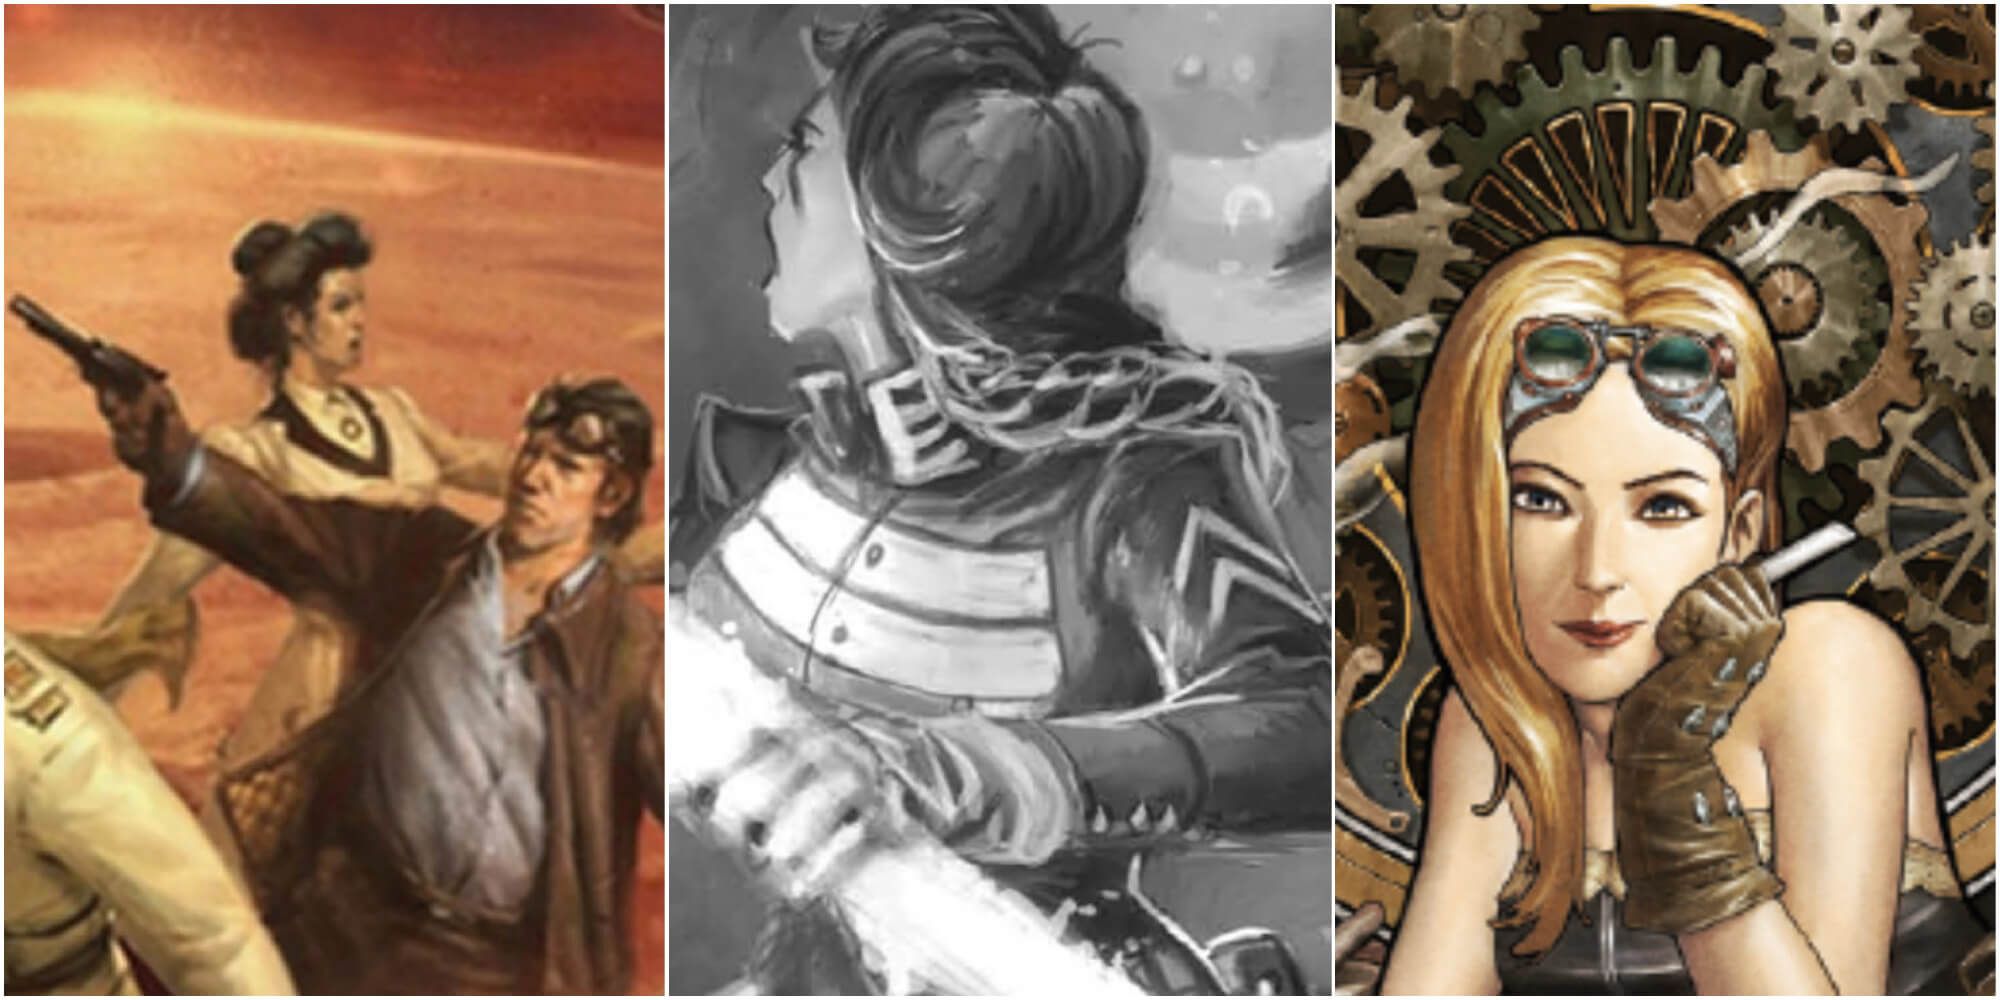 Steampunk RPGs Collage split image of artwork